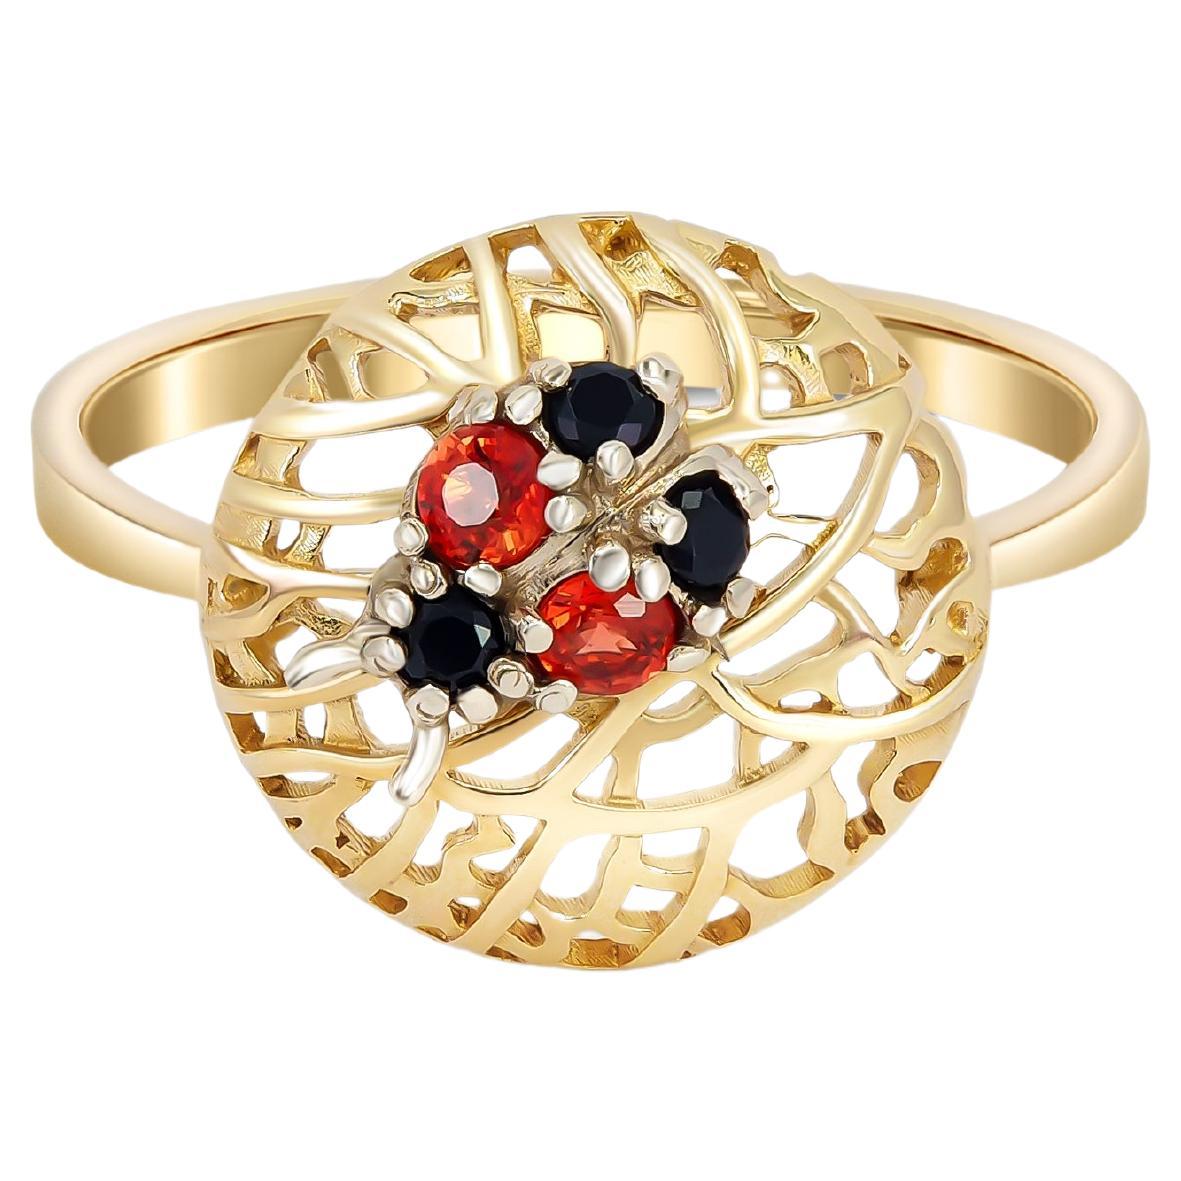 Ladybug ring with colored gemstones. 